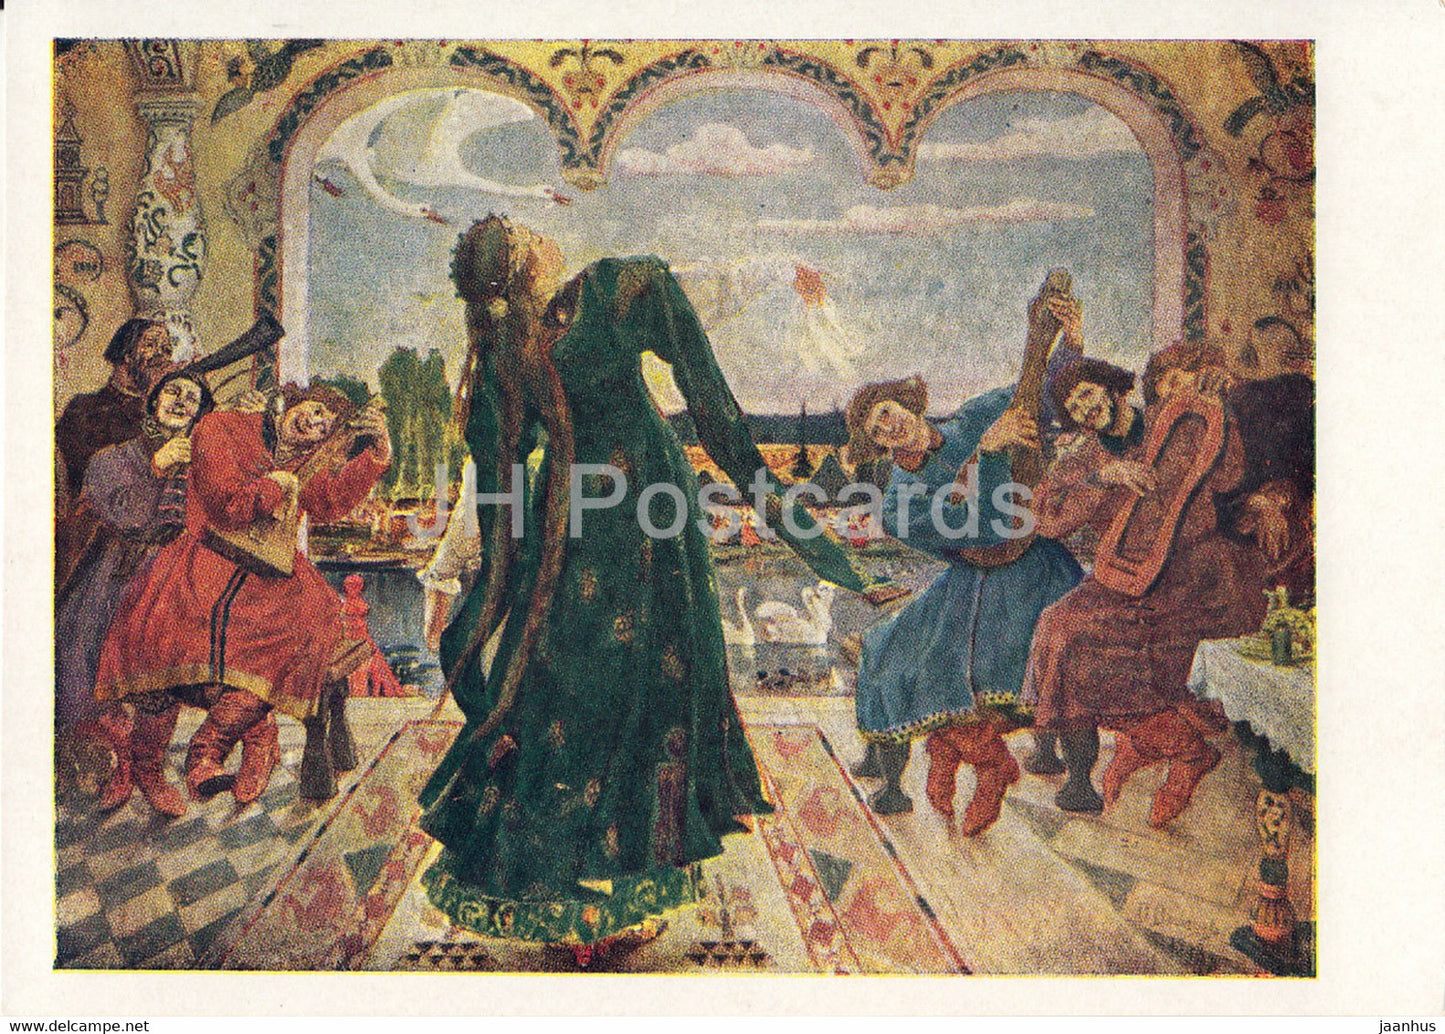 painting by V. Vasnetsov - Princess Frog - Fairy Tale - Russian art - 1963 - Russia USSR - unused - JH Postcards